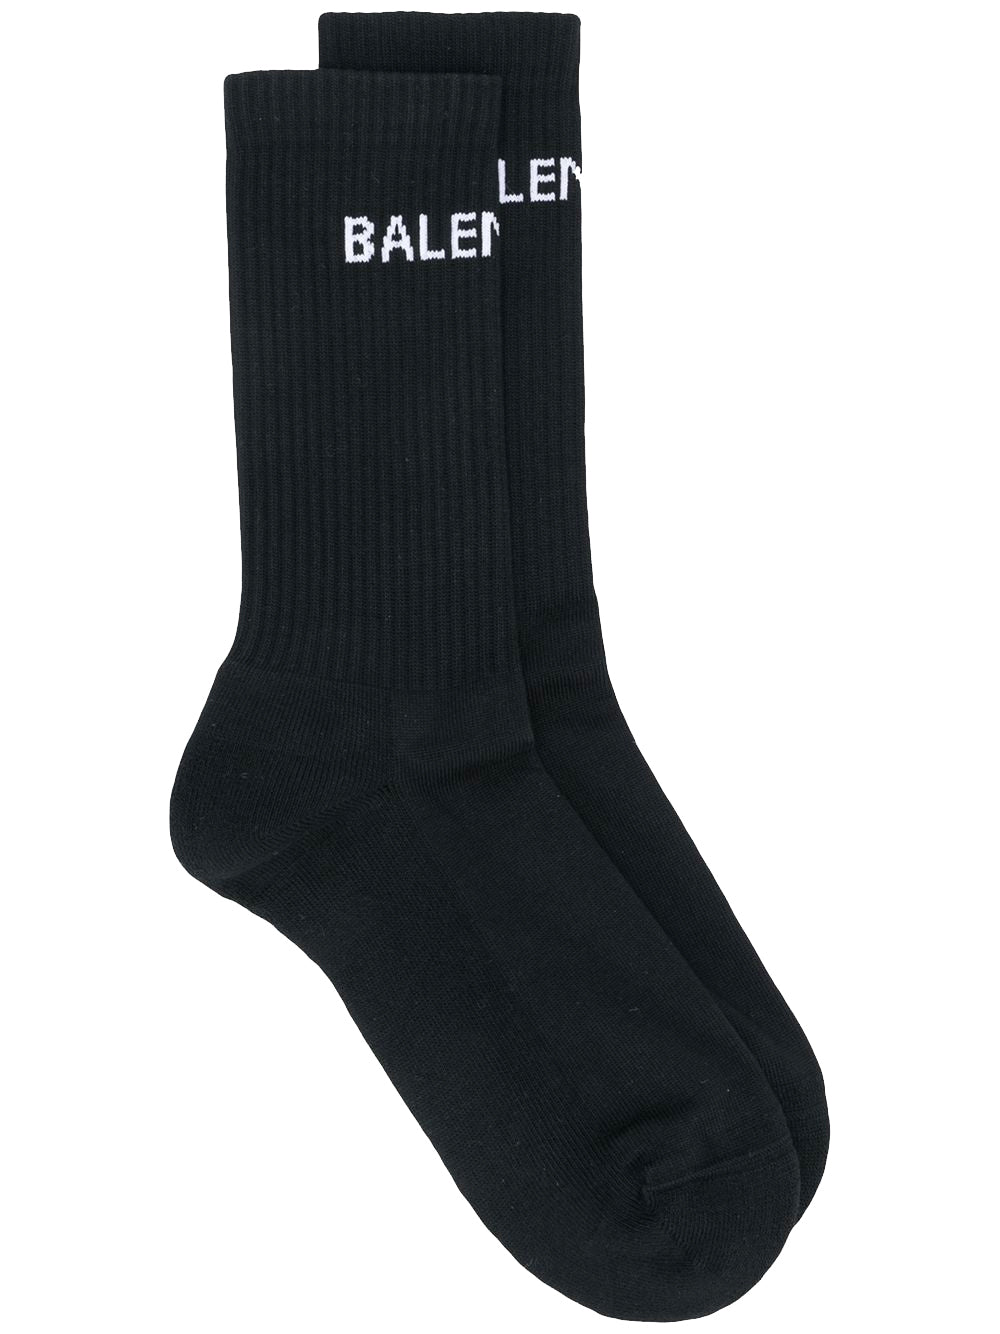 Image of BALENCIAGA Socks Tennis Black/White